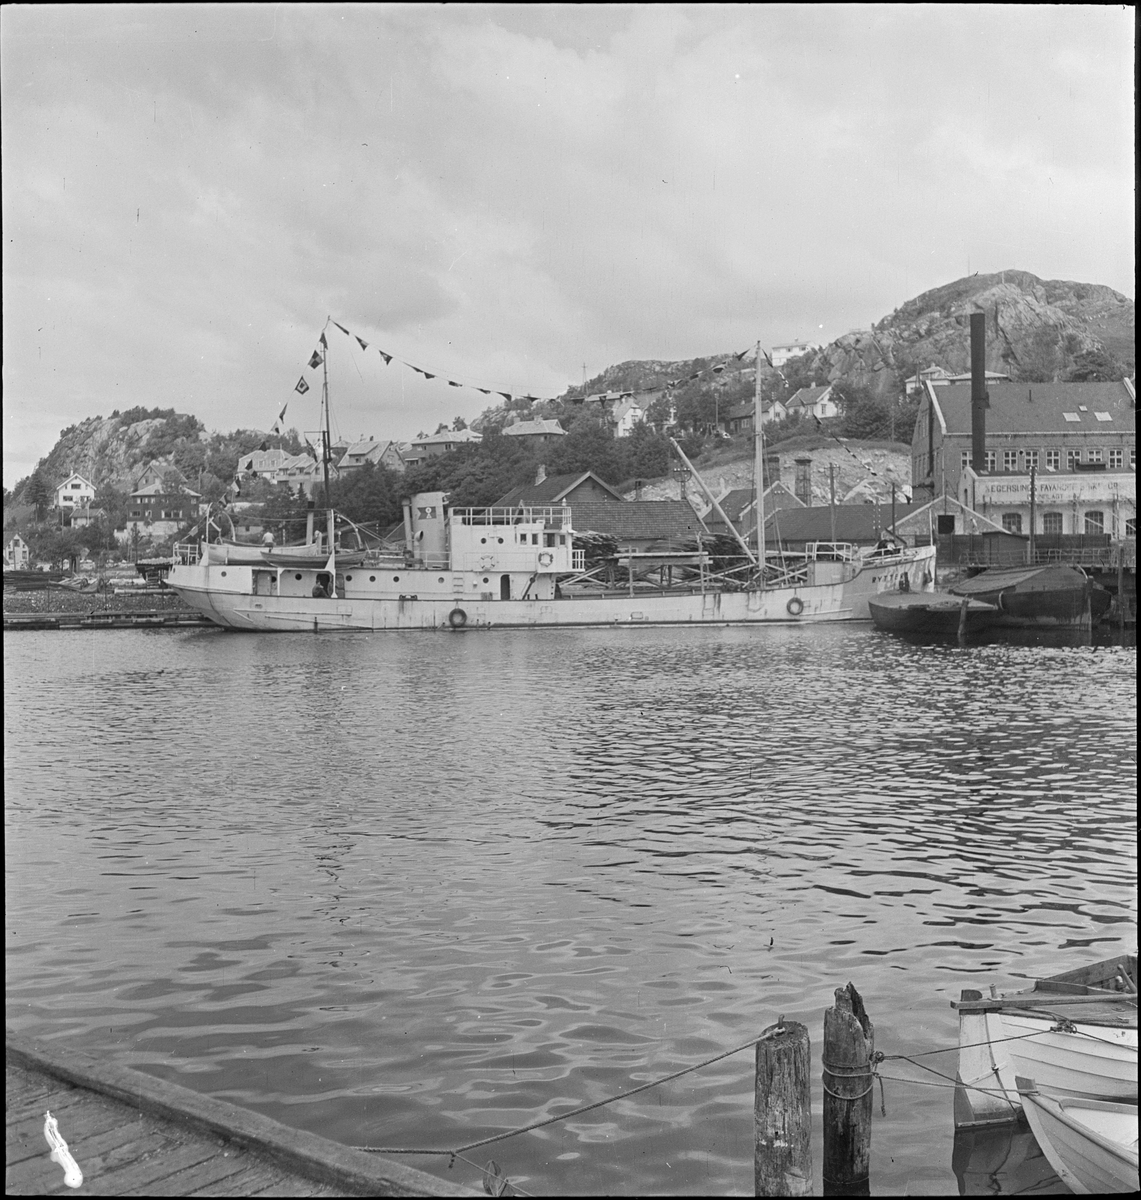 Stykkgodsskipet "M/S Rytter" ved kai i Egersund. Skipet er pyntet med vimpler.